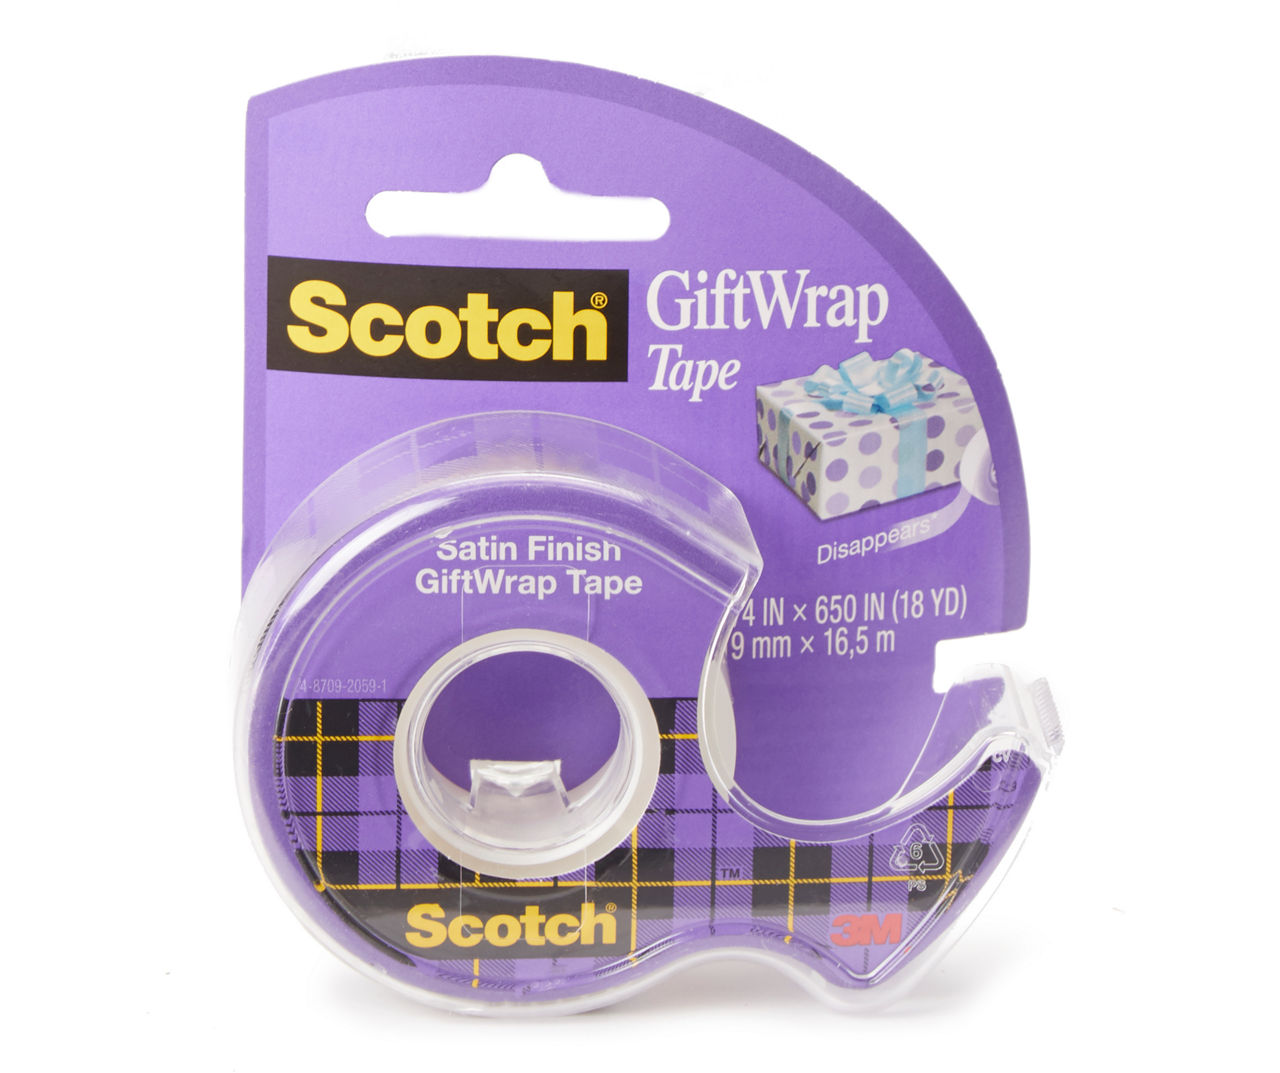 3M Scotch Giftwrap Tape Dispenser Roll